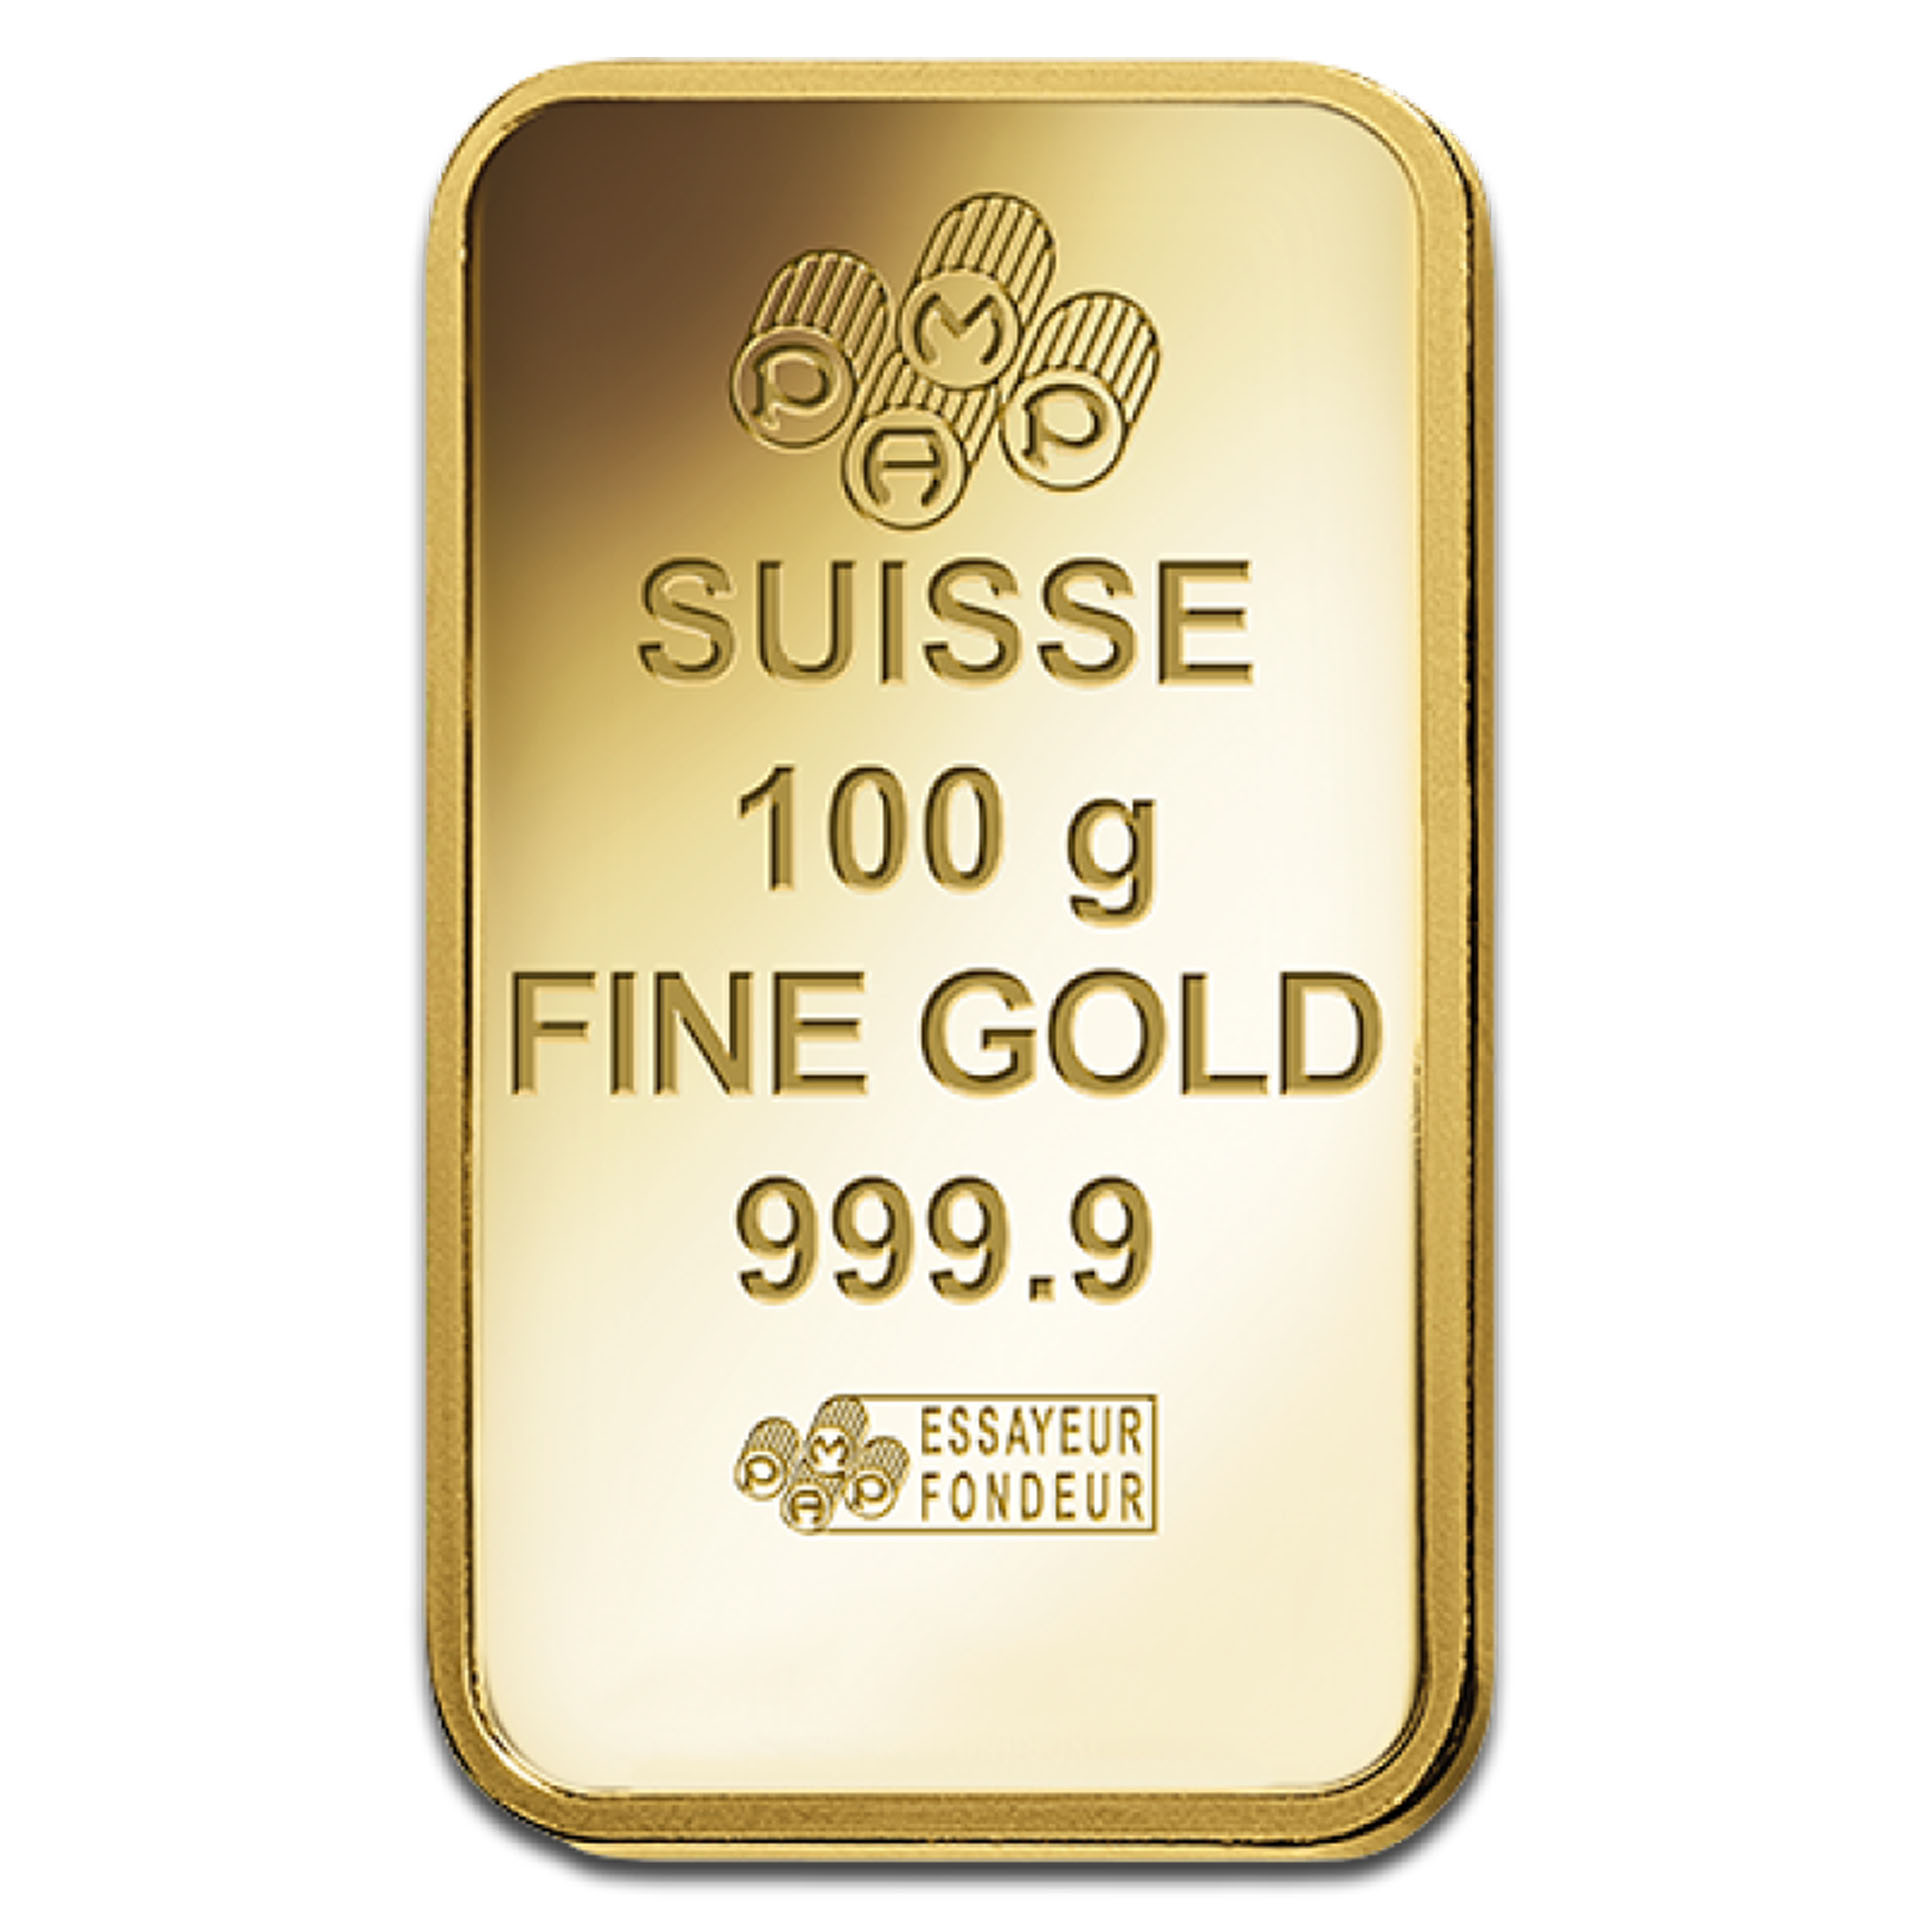 125 грамм золота. Suisse 10g Fine Silver 999.9 белое золото. Suisse 10g Fine Gold 999.9 кулон. Слиток золота 999. 999.9 Fine Gold кулон серебро.